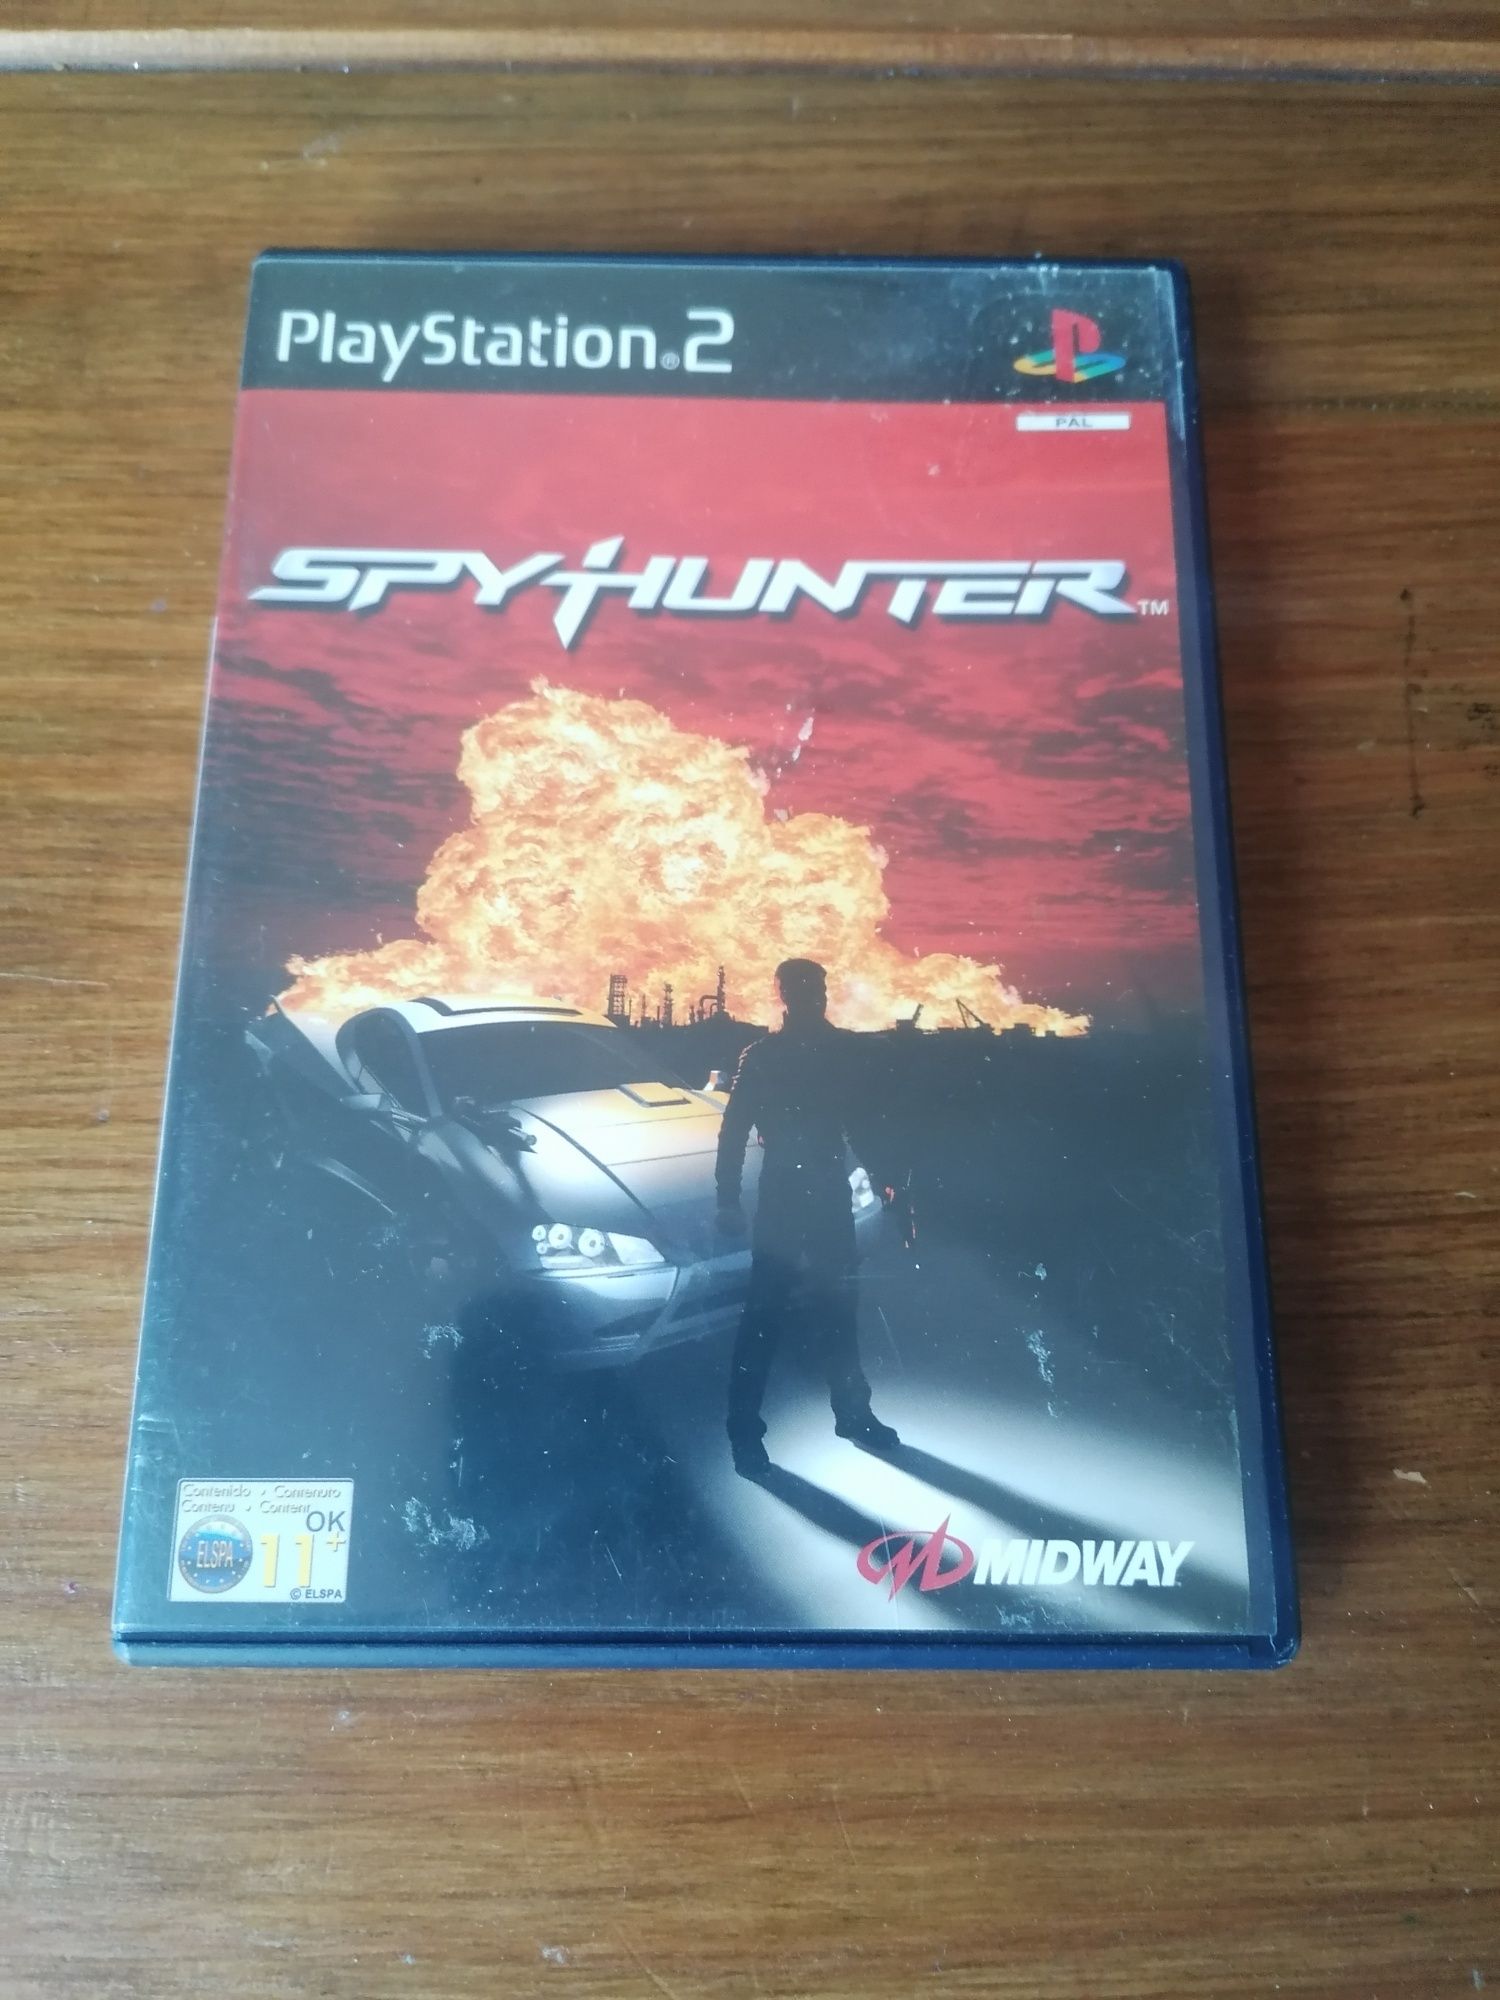 Ps2 gra Spyhunter playstation